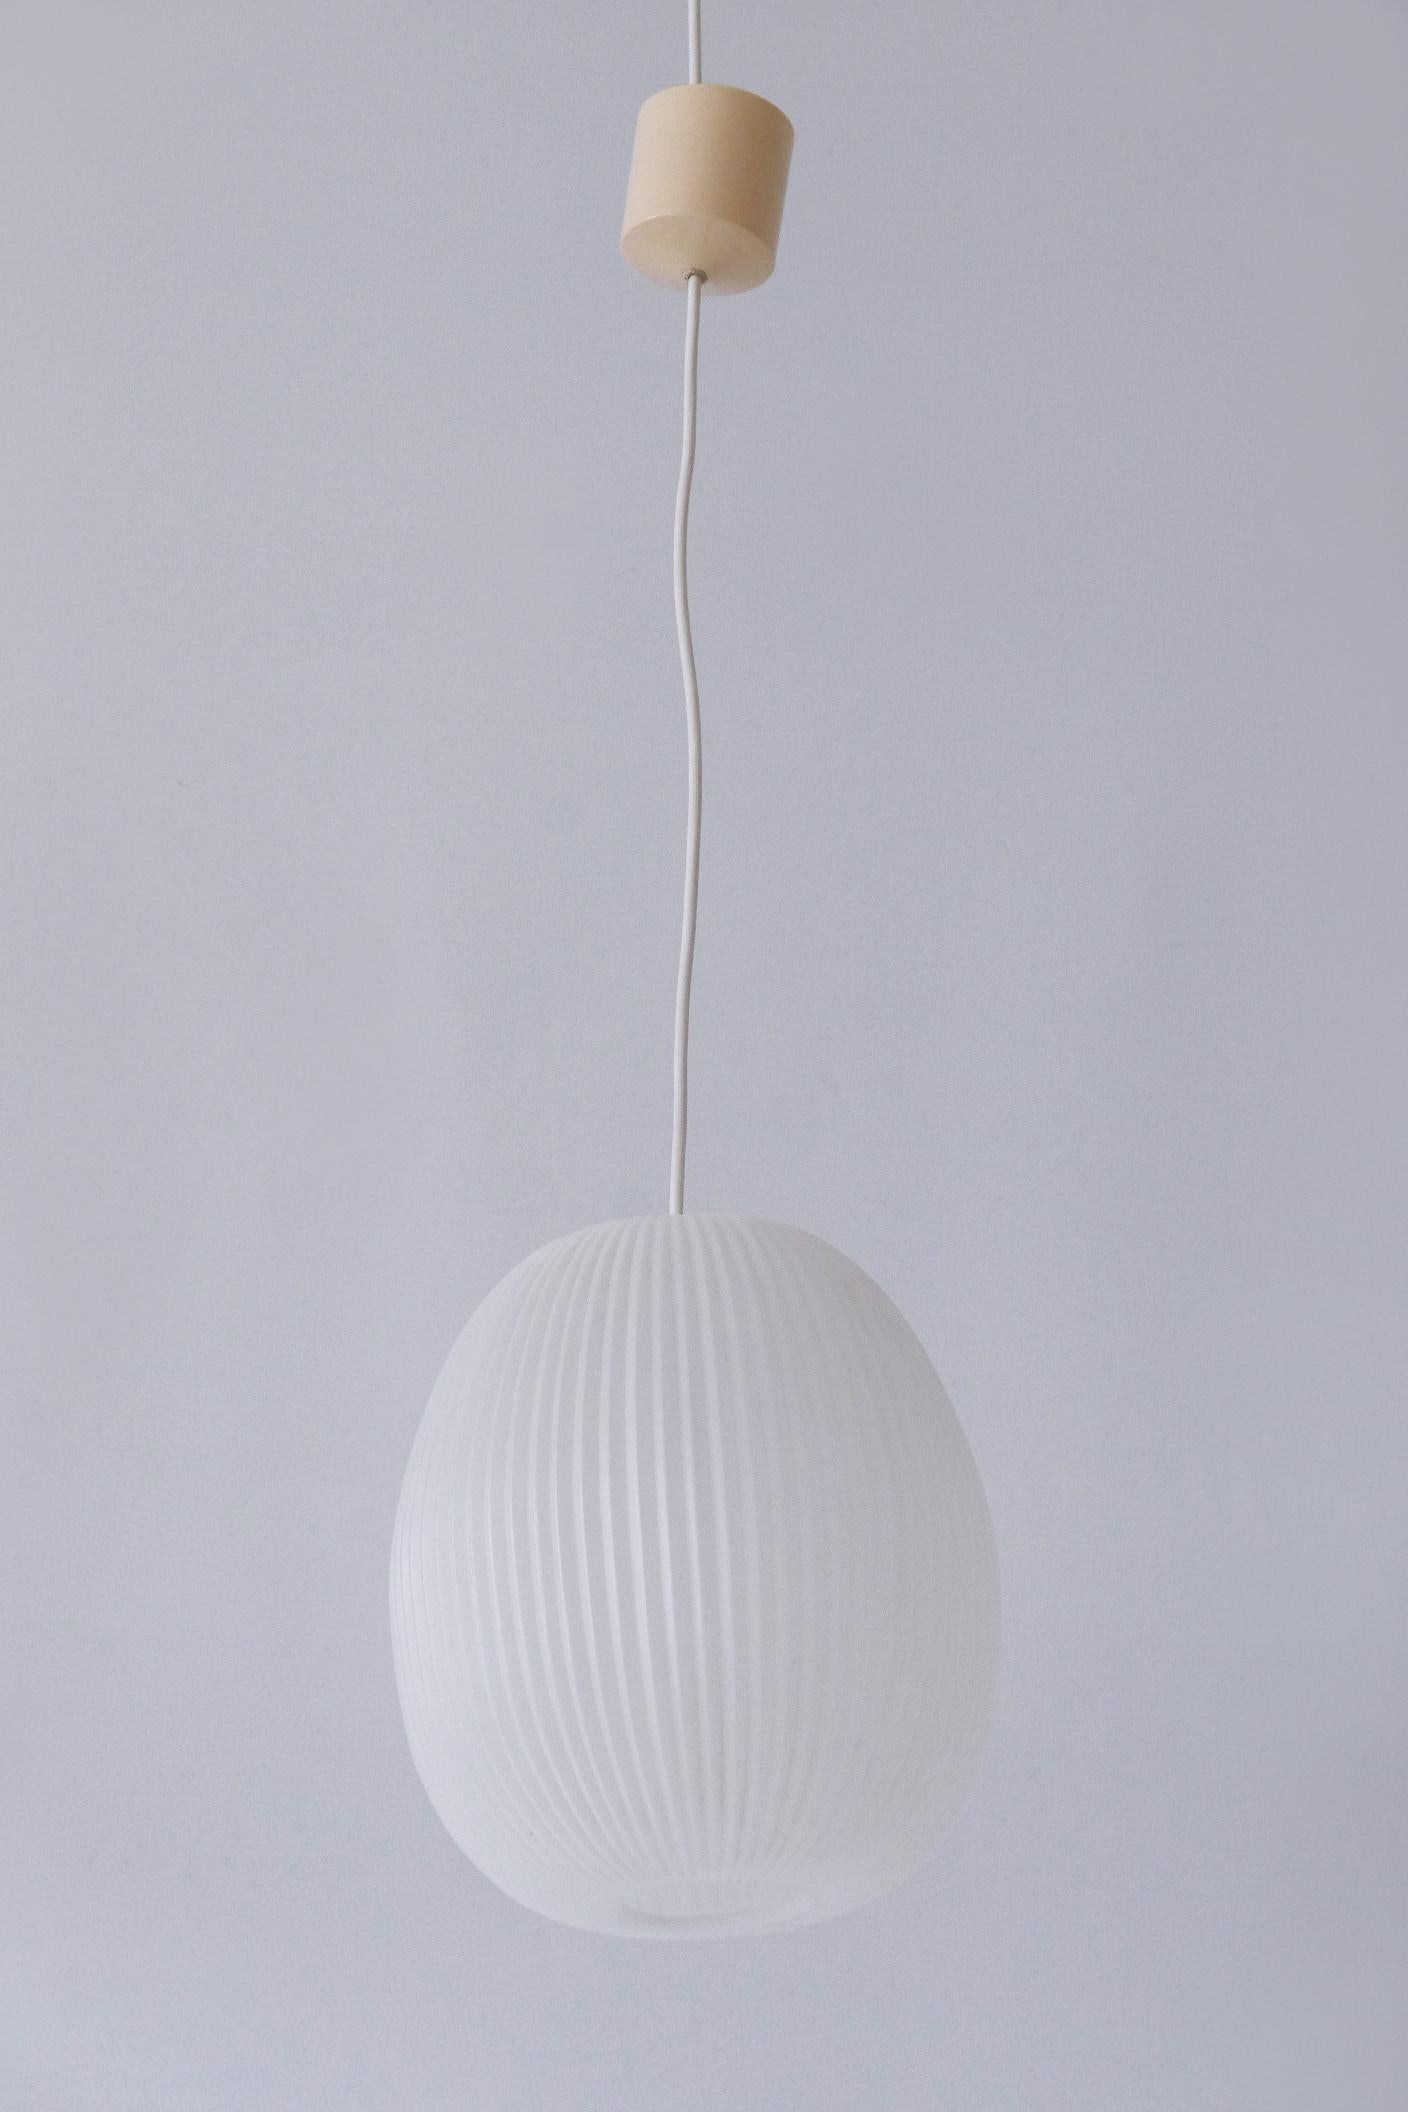 Plastic Lovely Mid-Century Modern Pendant Lamp by Aloys F. Gangkofner für Erco 1960s For Sale